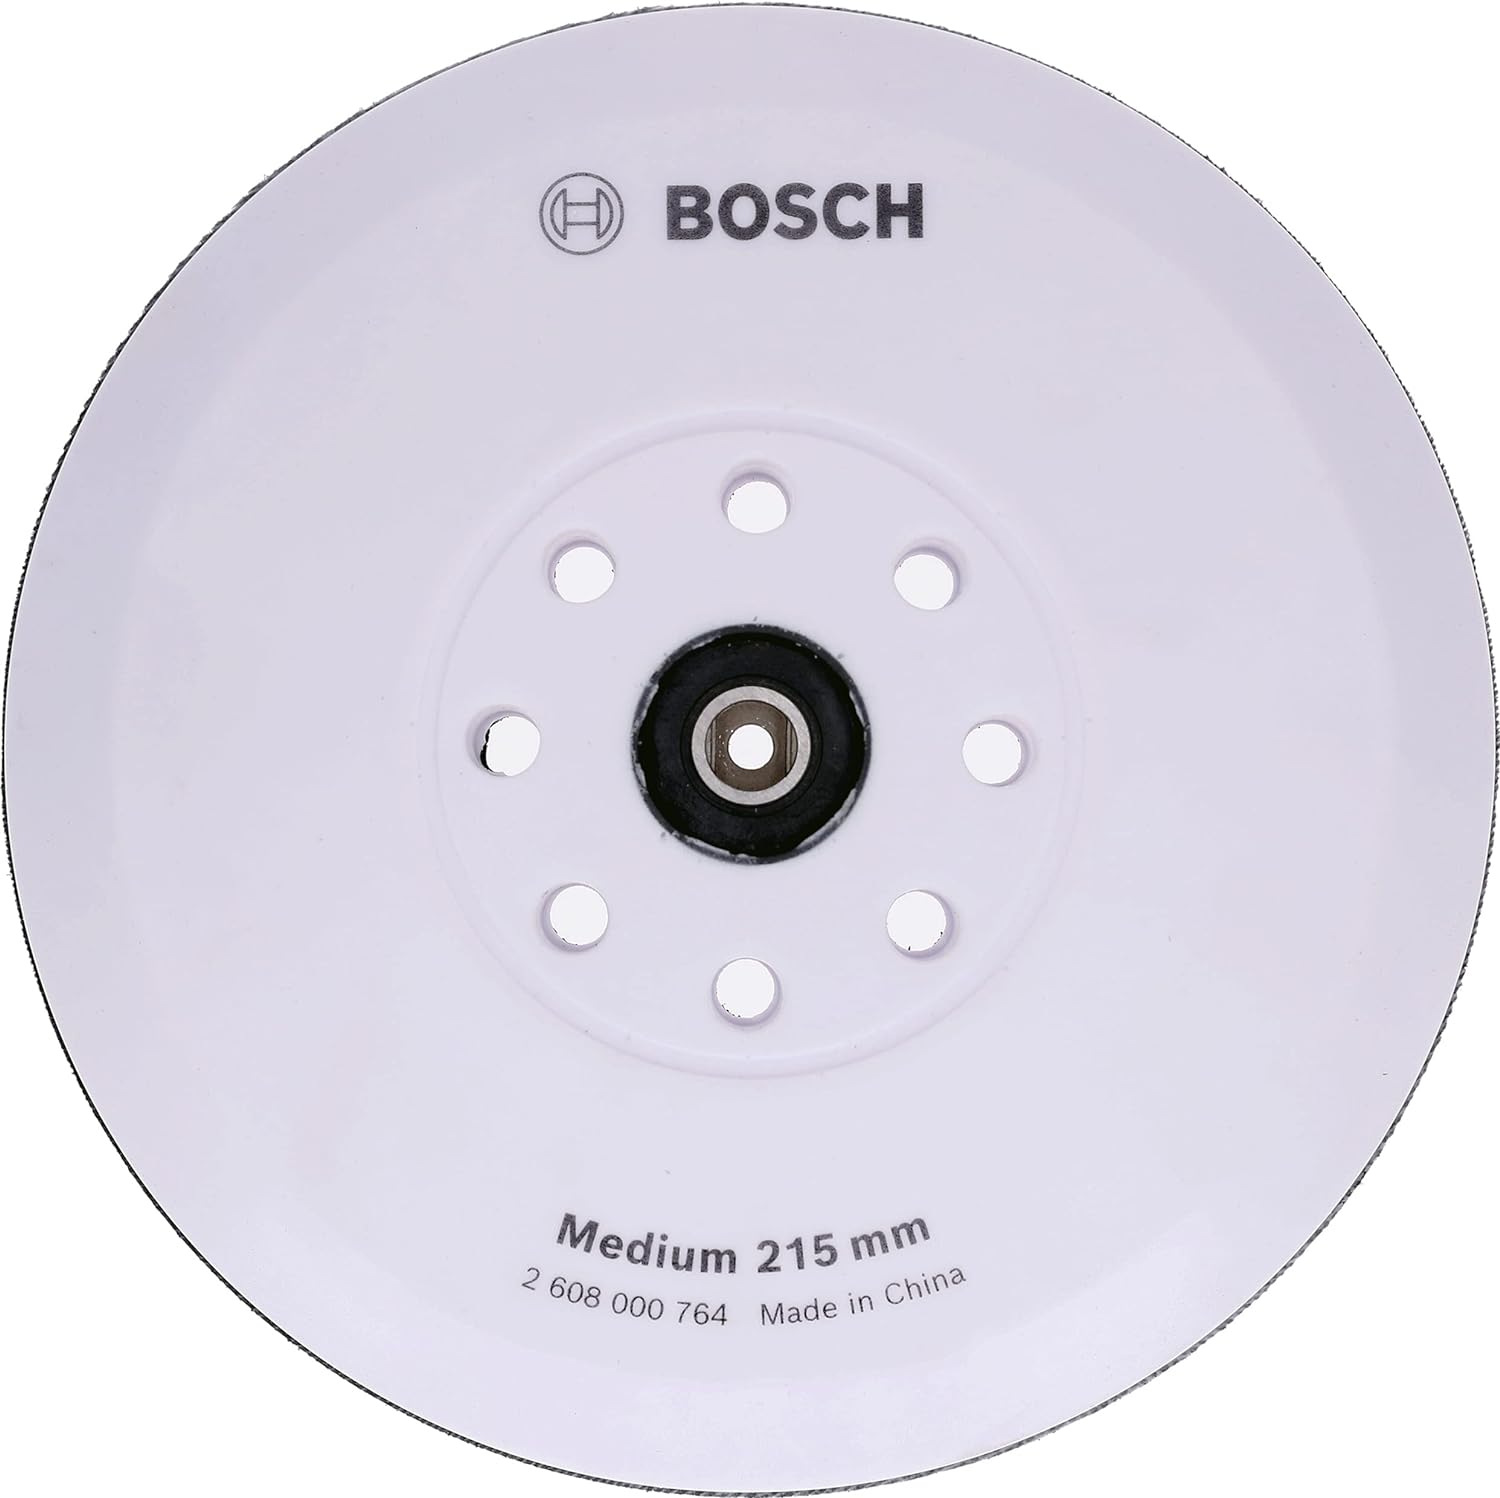 Bosch Backing Pad 225mm, medium 2608000764 Power Tool Services